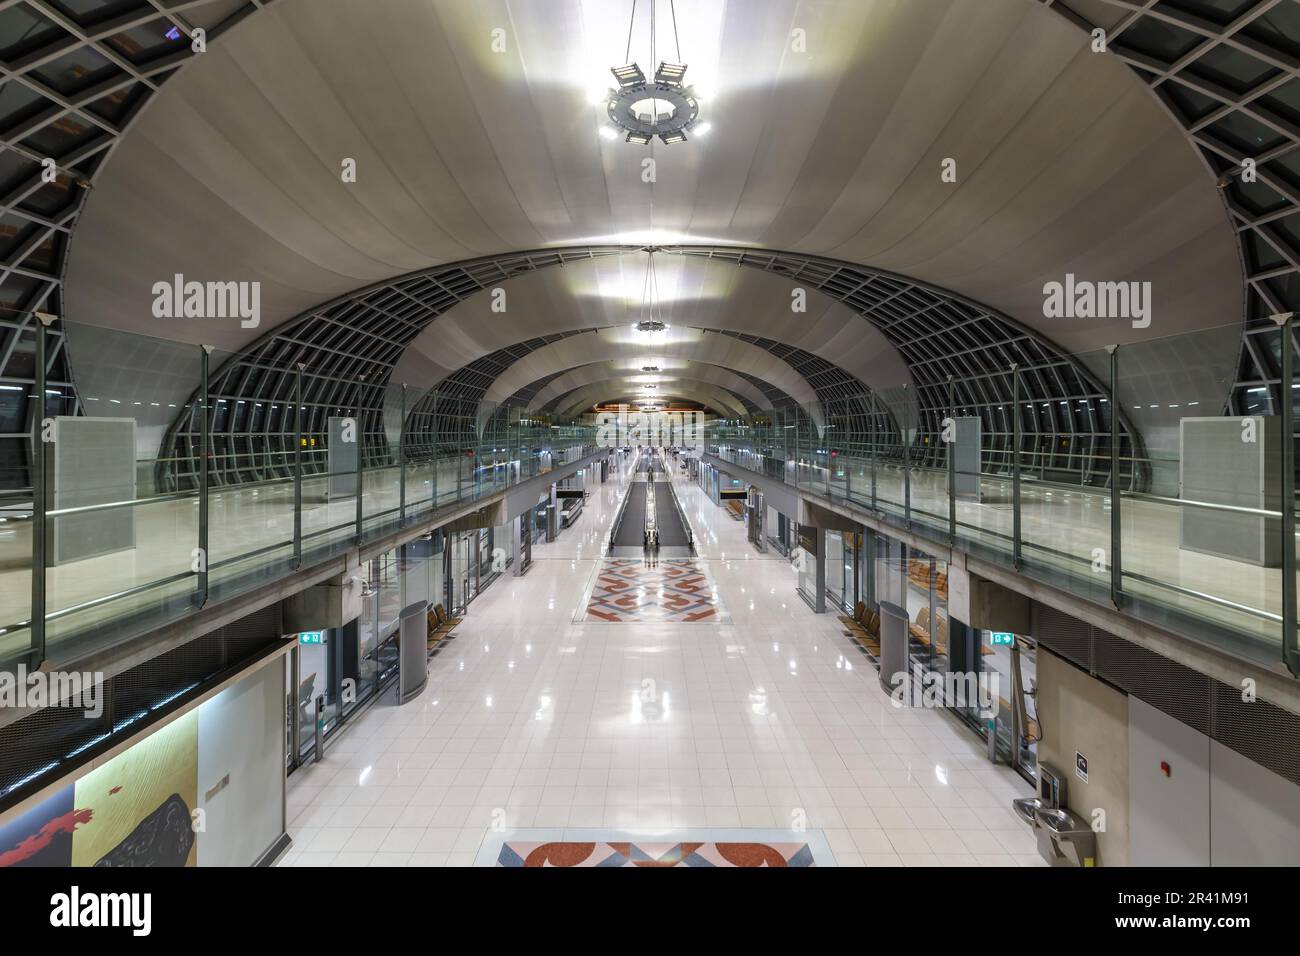 Flughafen Bangkok Suvarnabhumi BKK Airport terminal en Thaïlande Banque D'Images